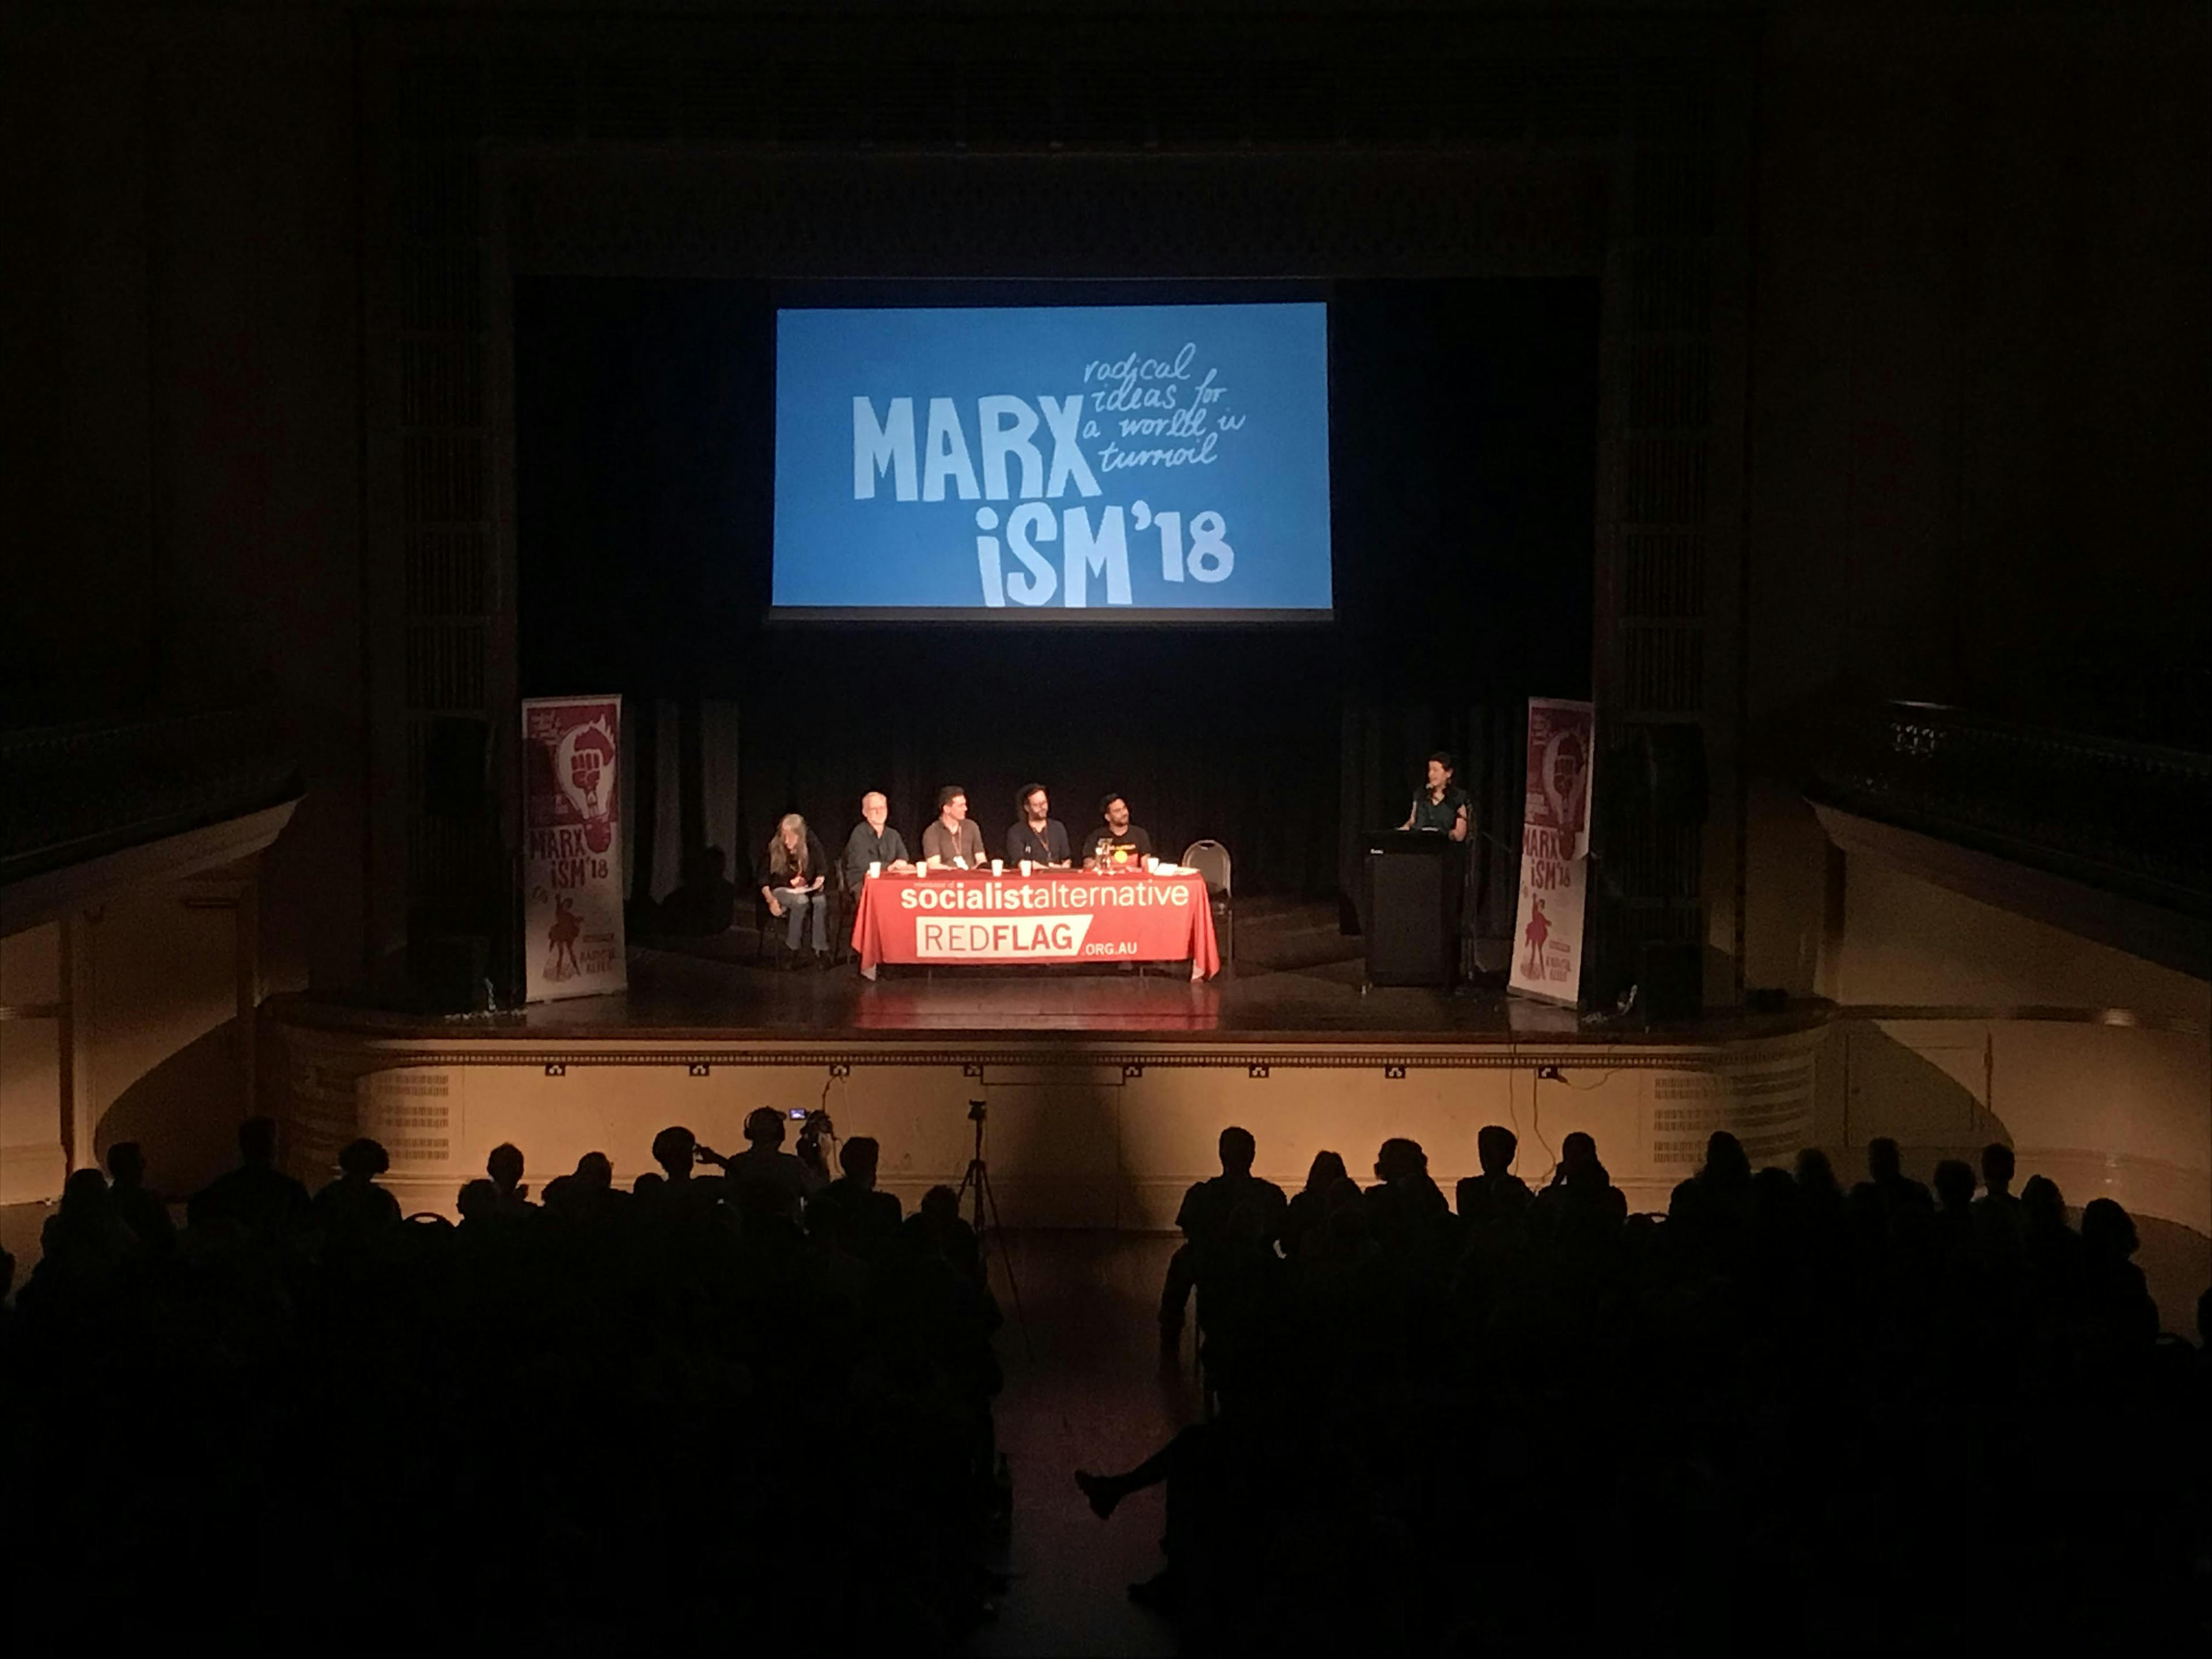 Marxism conference kicks off in Melbourne